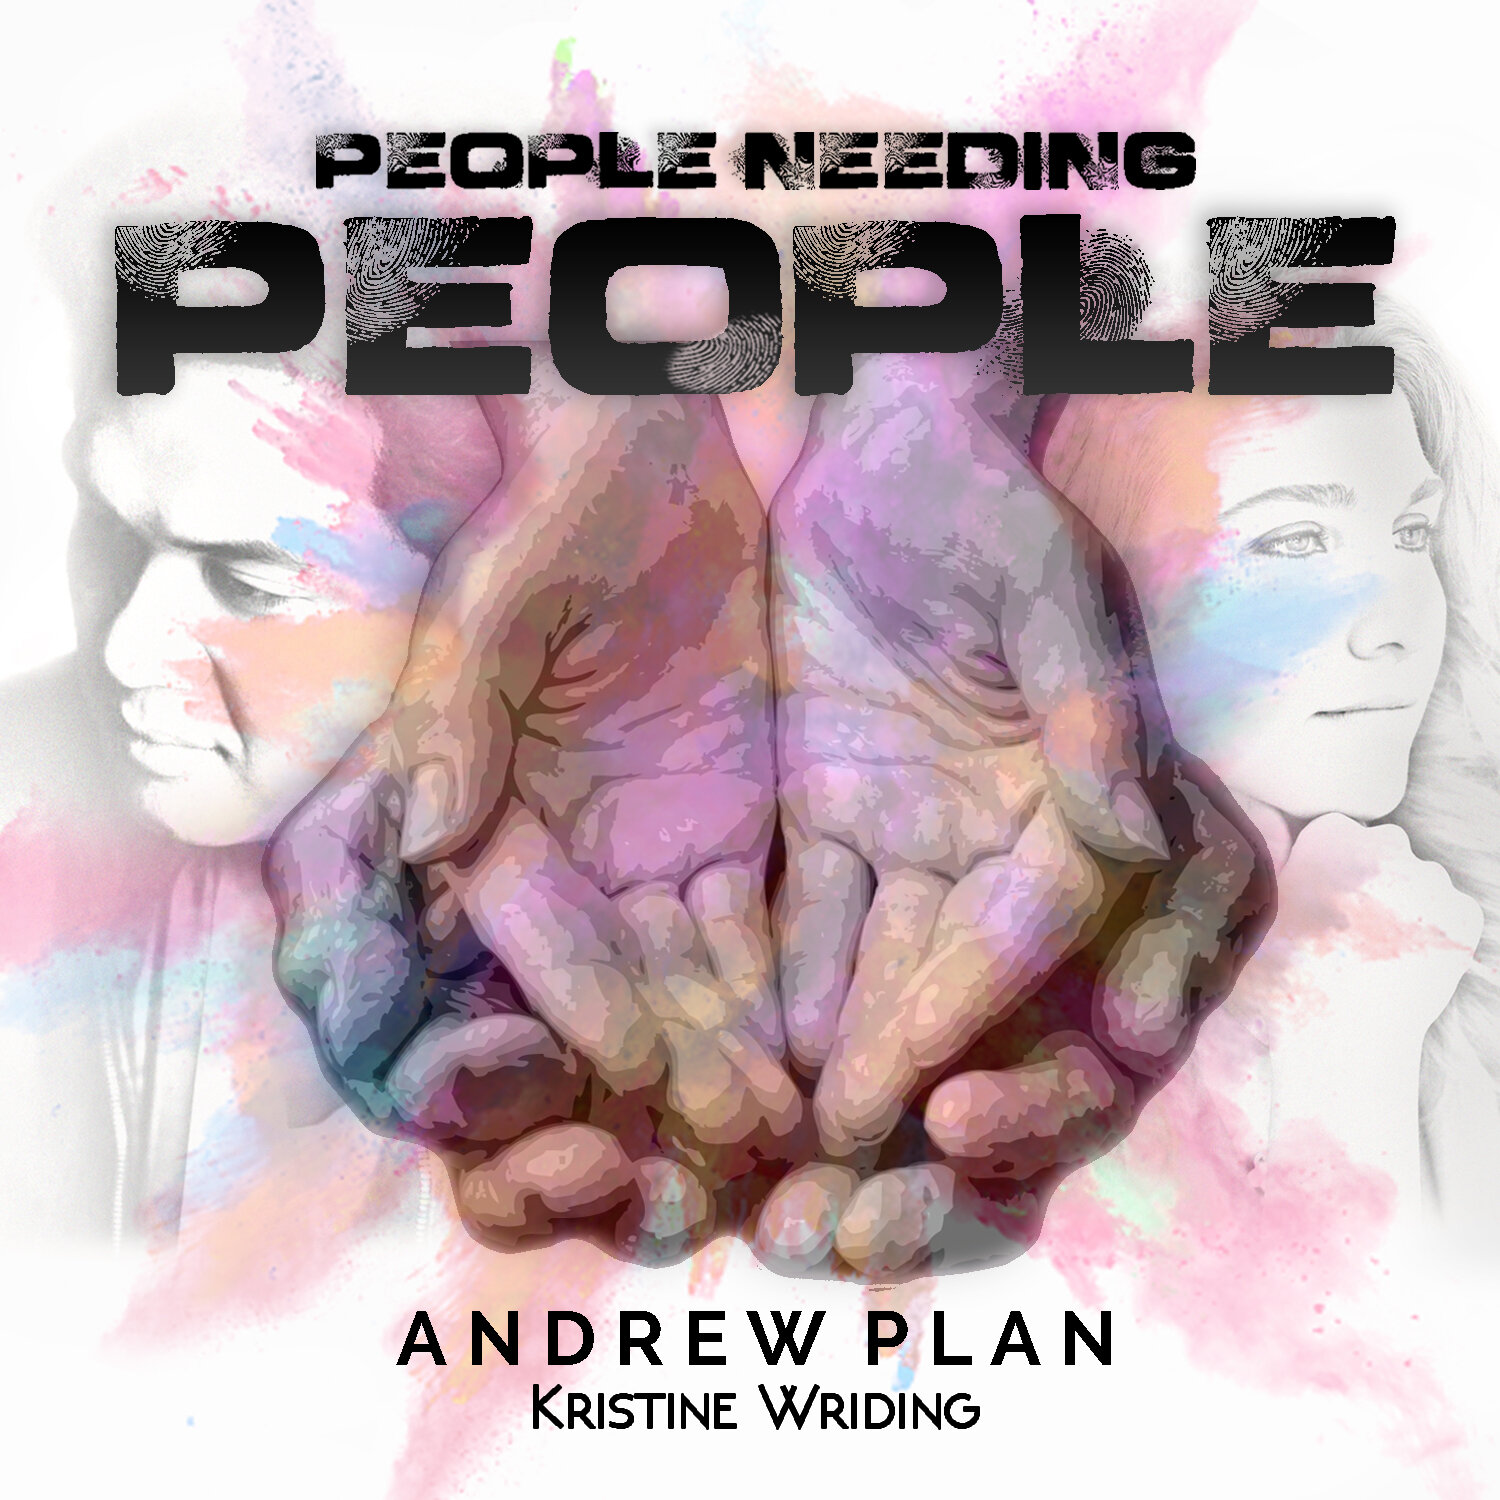 People Needing People_Andrew Plan_Kristine Wriding_Single Cover Art.jpg